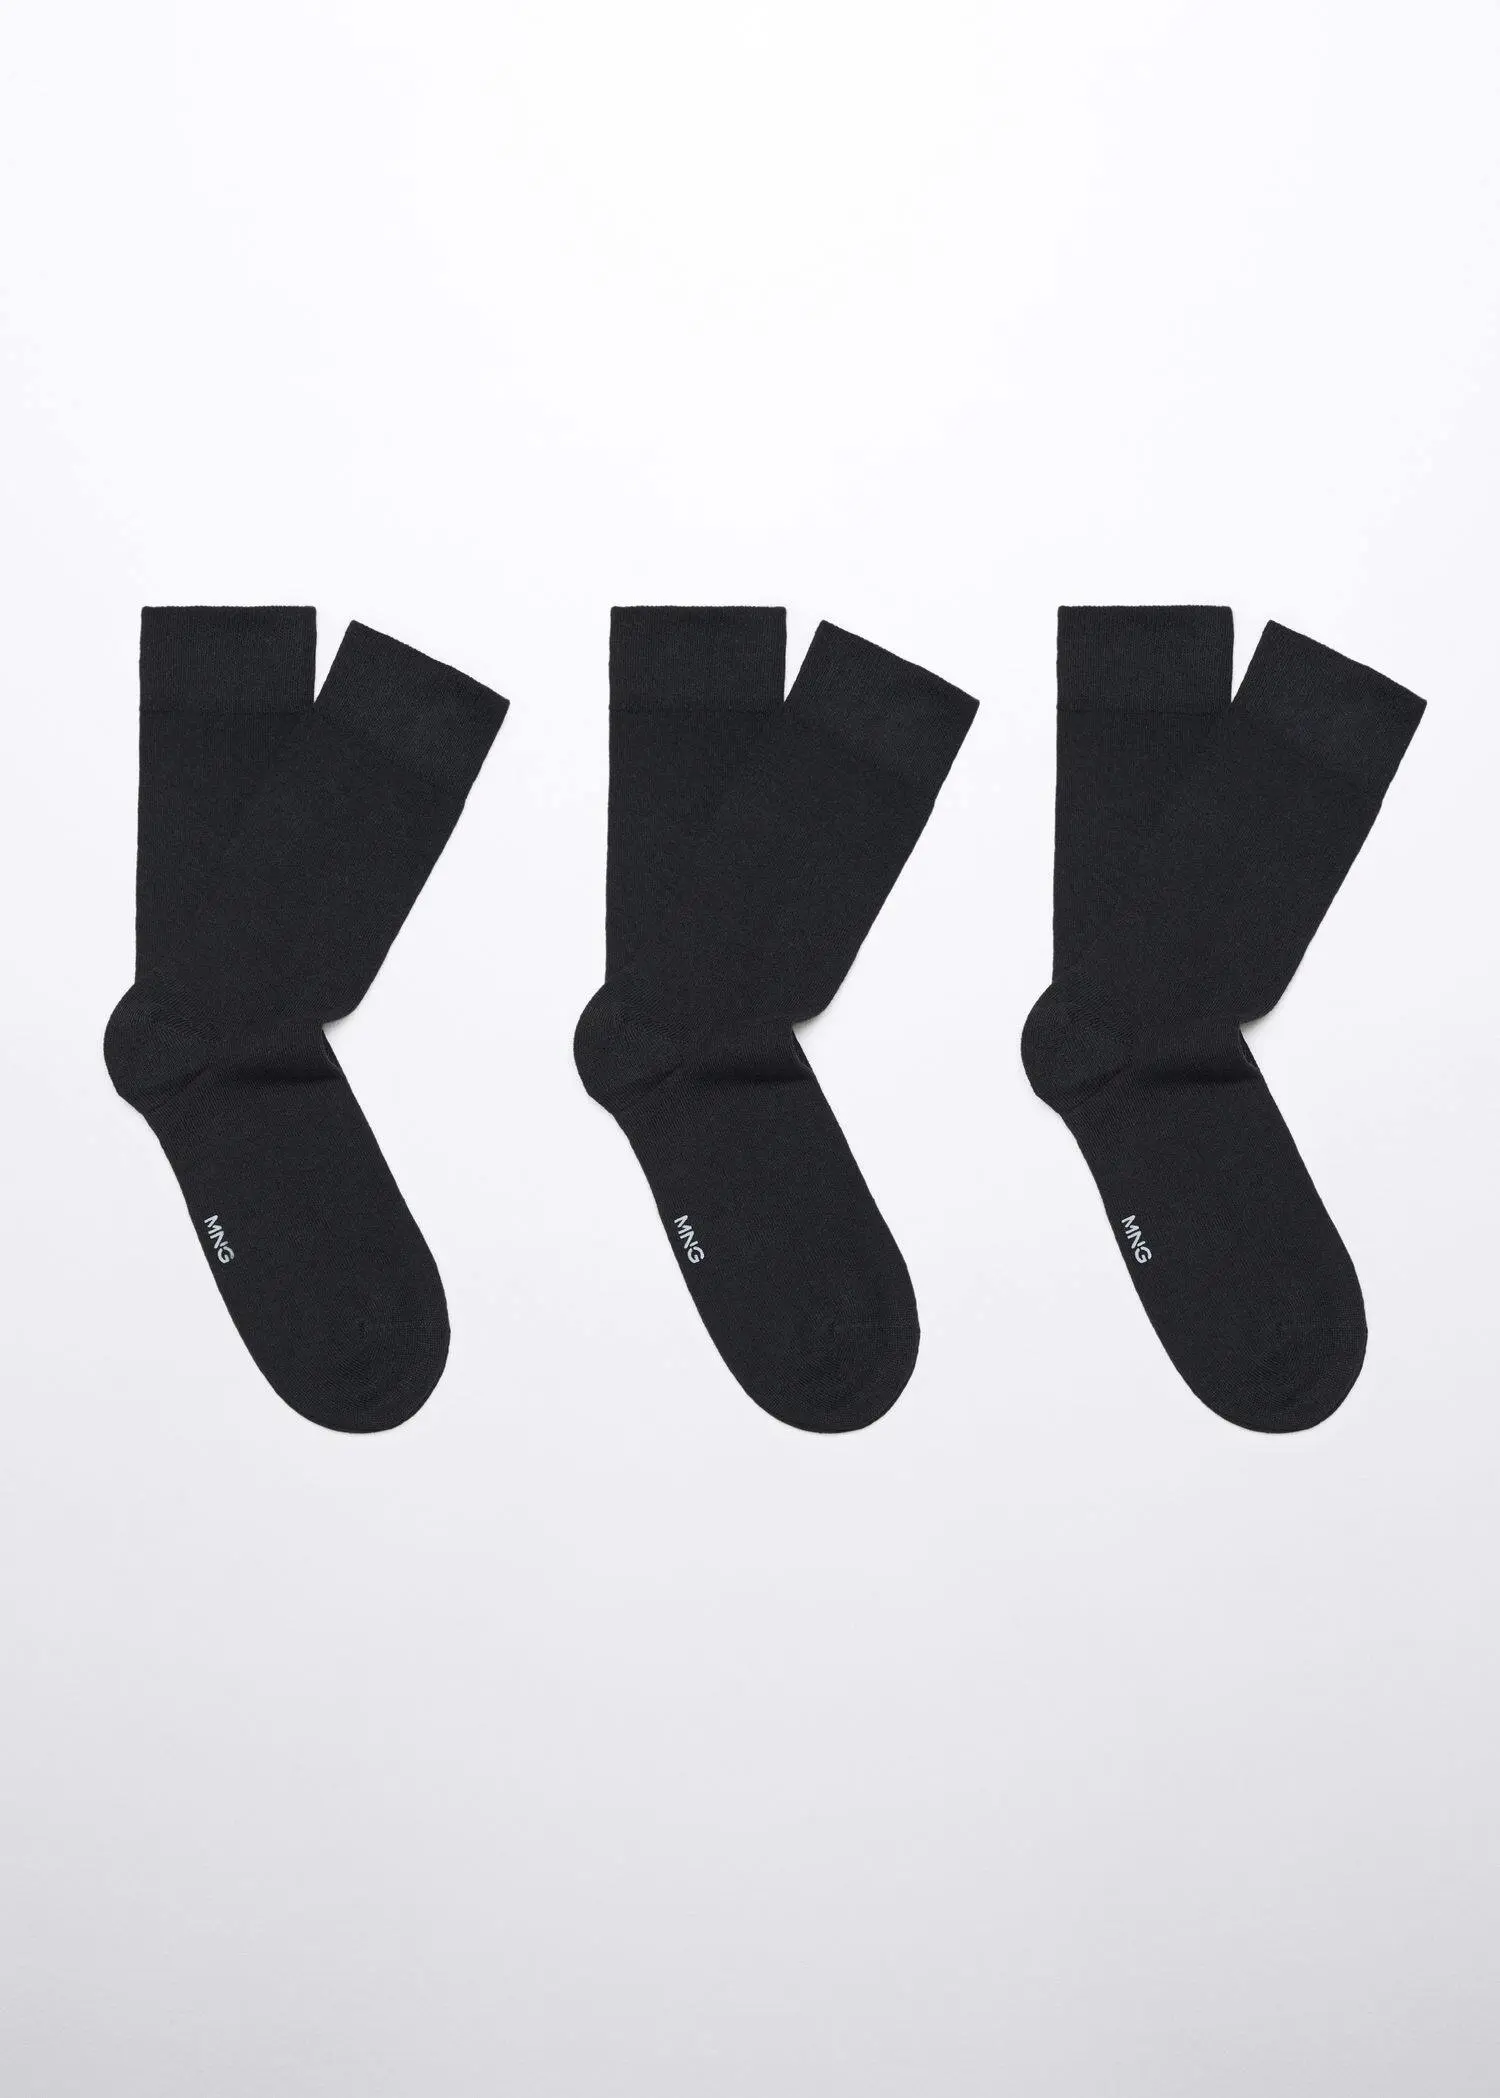 Mango Pack of 3 cotton socks. three pairs of black socks on a white background. 